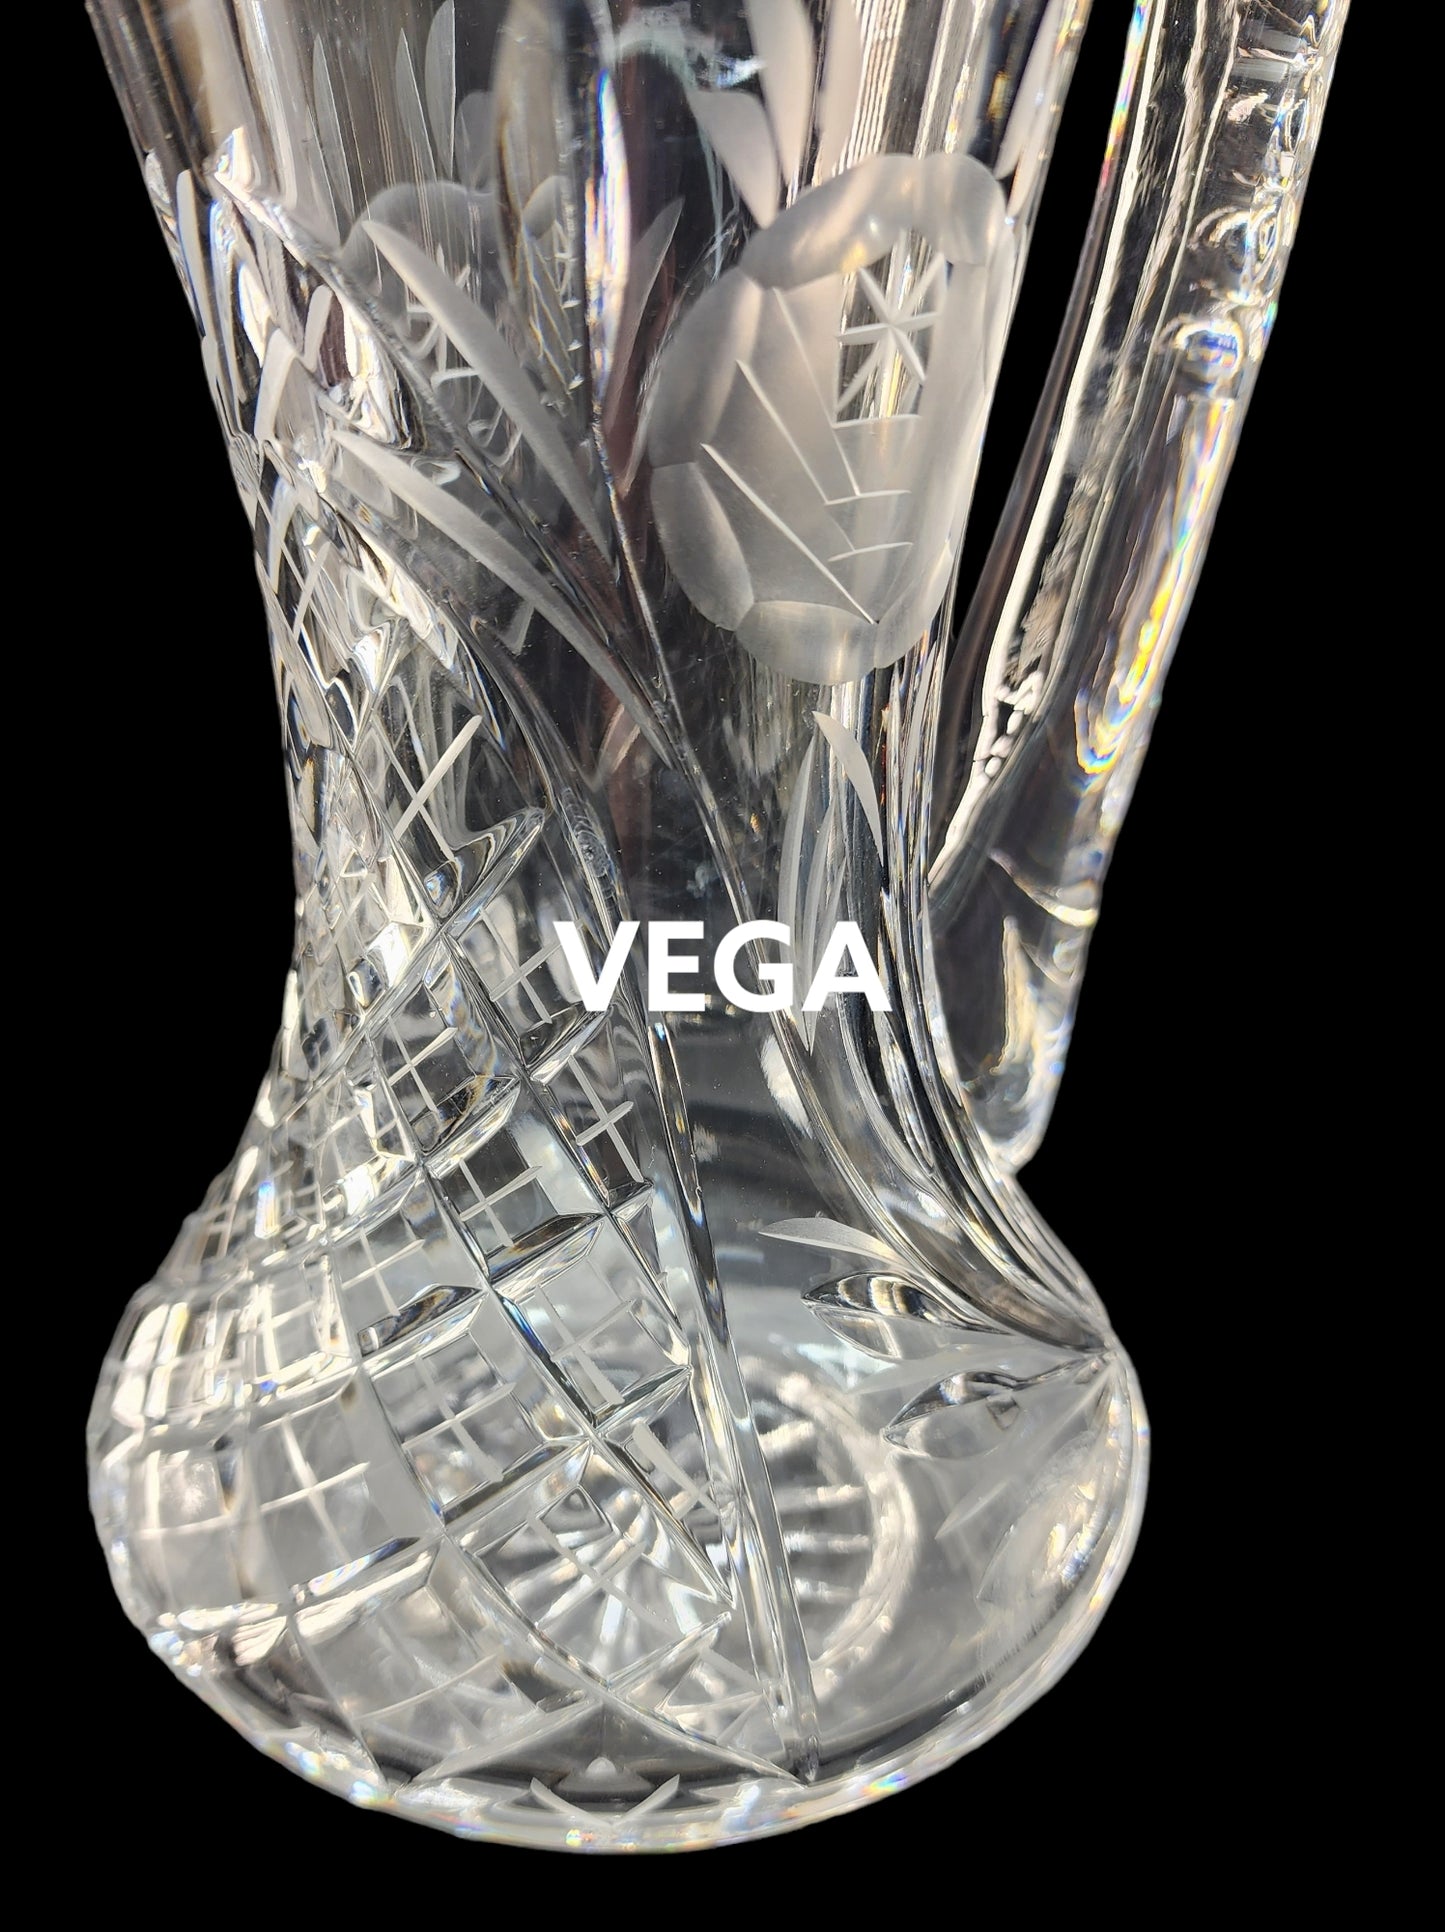 Cut glass pitcher Hungry vega